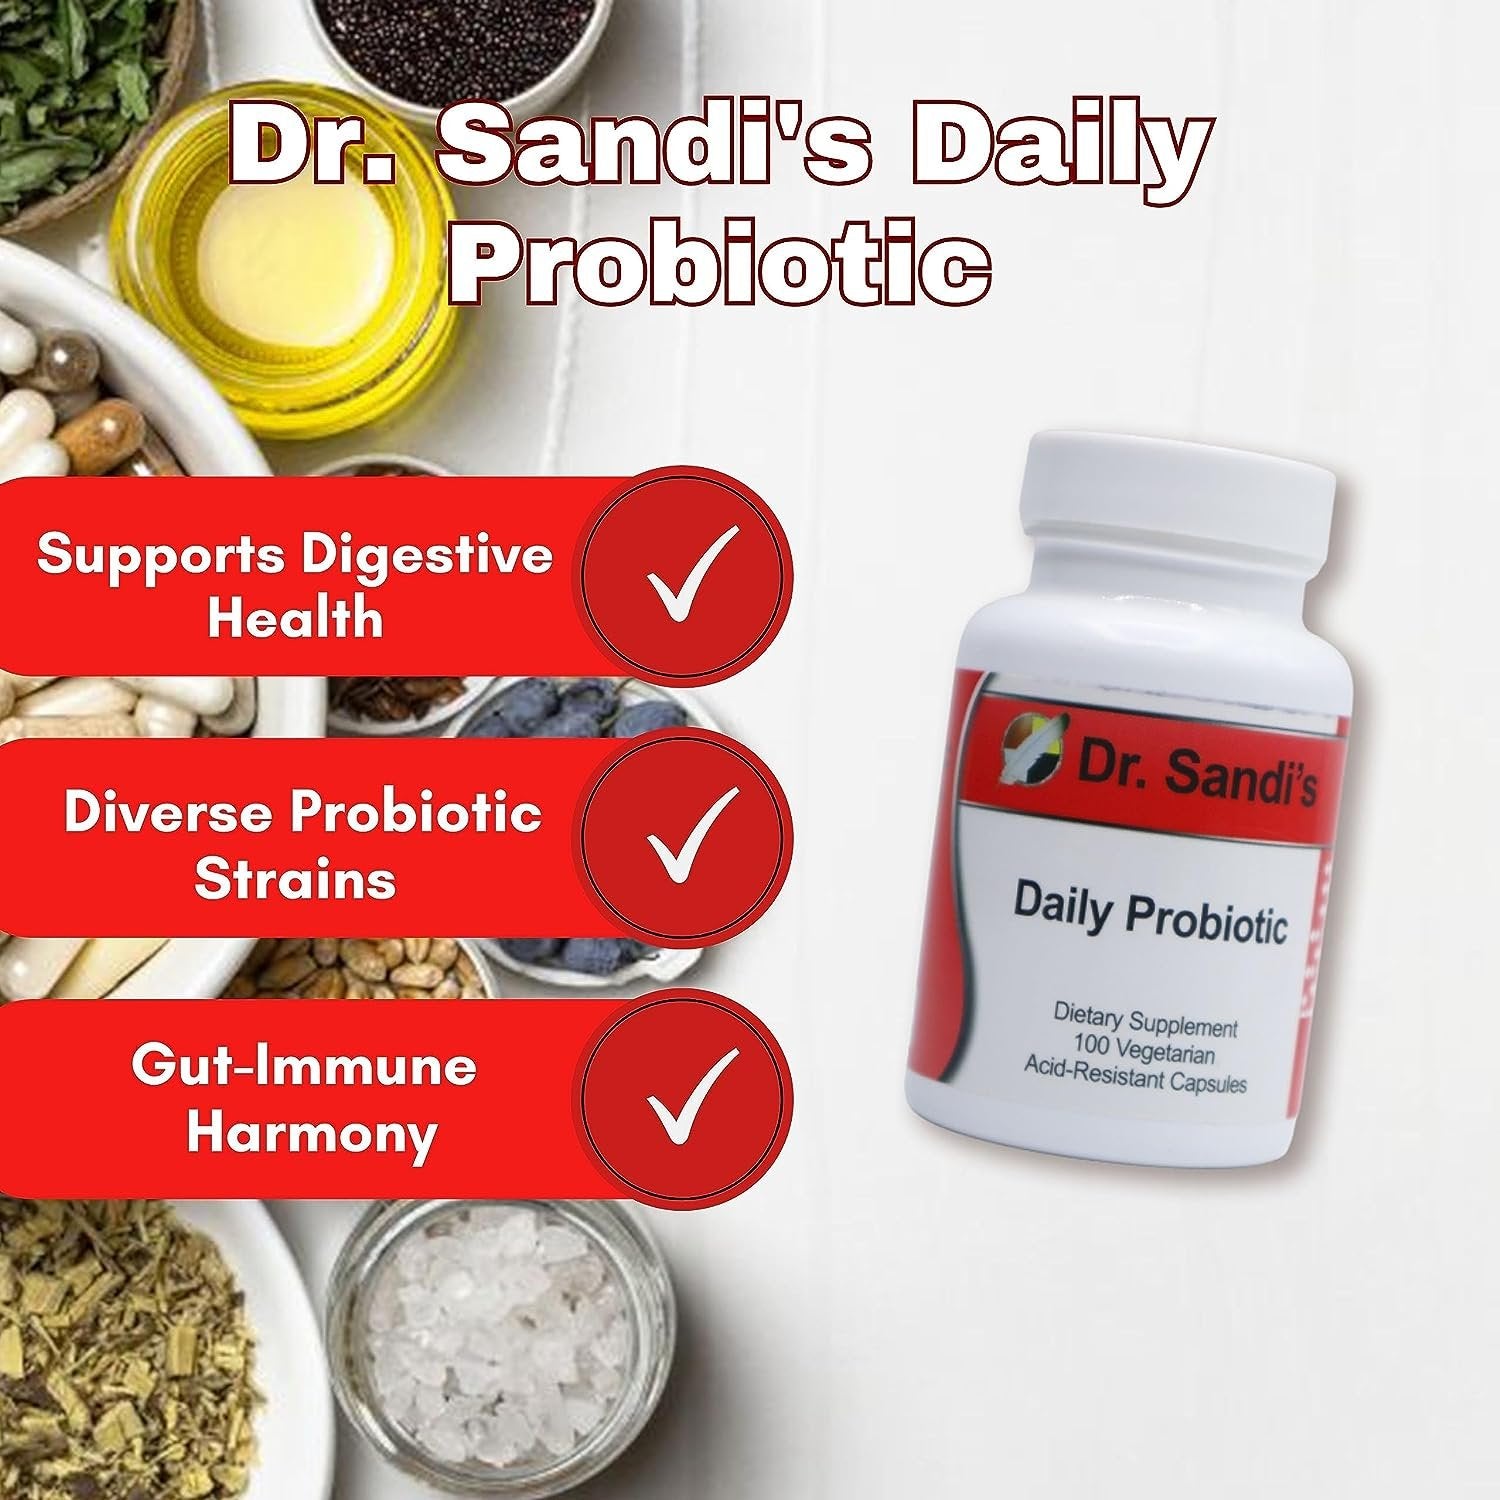 Dr. Sandi's Daily Probiotic - Probiotics For Digestive Health, Womens Probiotic & Probiotics For Men - Lactobacillus Gasseri, Rhamnosus, Acidophilus Probiotic - 100 Count Probiotic Supplement Tablets